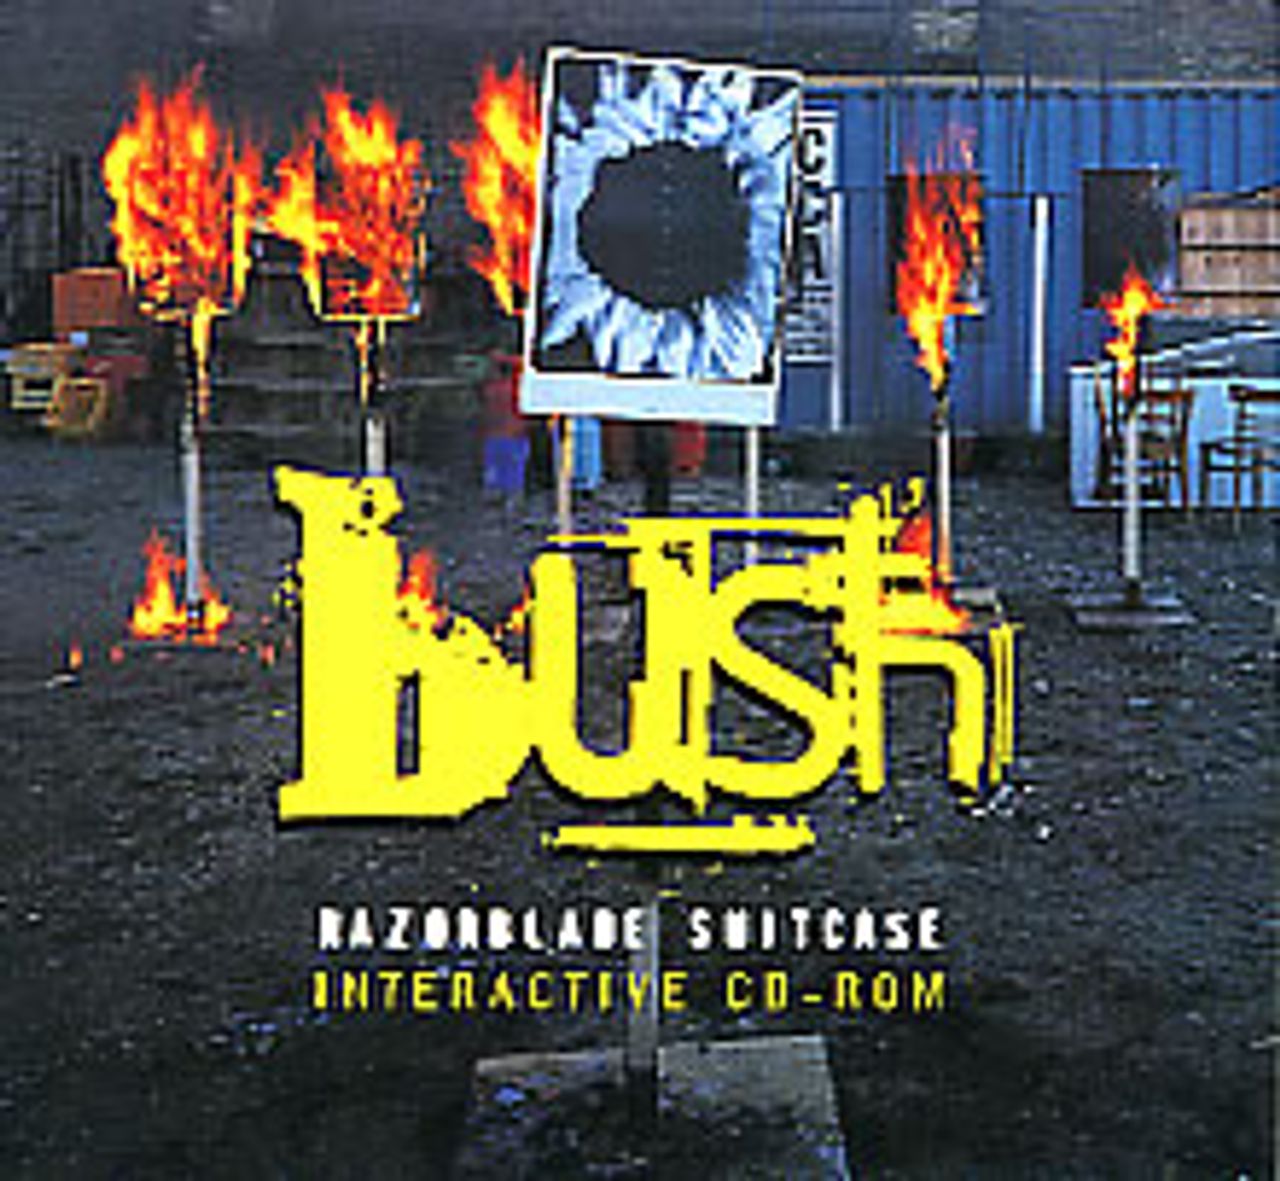 Bush Razorblade Suitcase Interactive Cd-rom US Promo CD-ROM